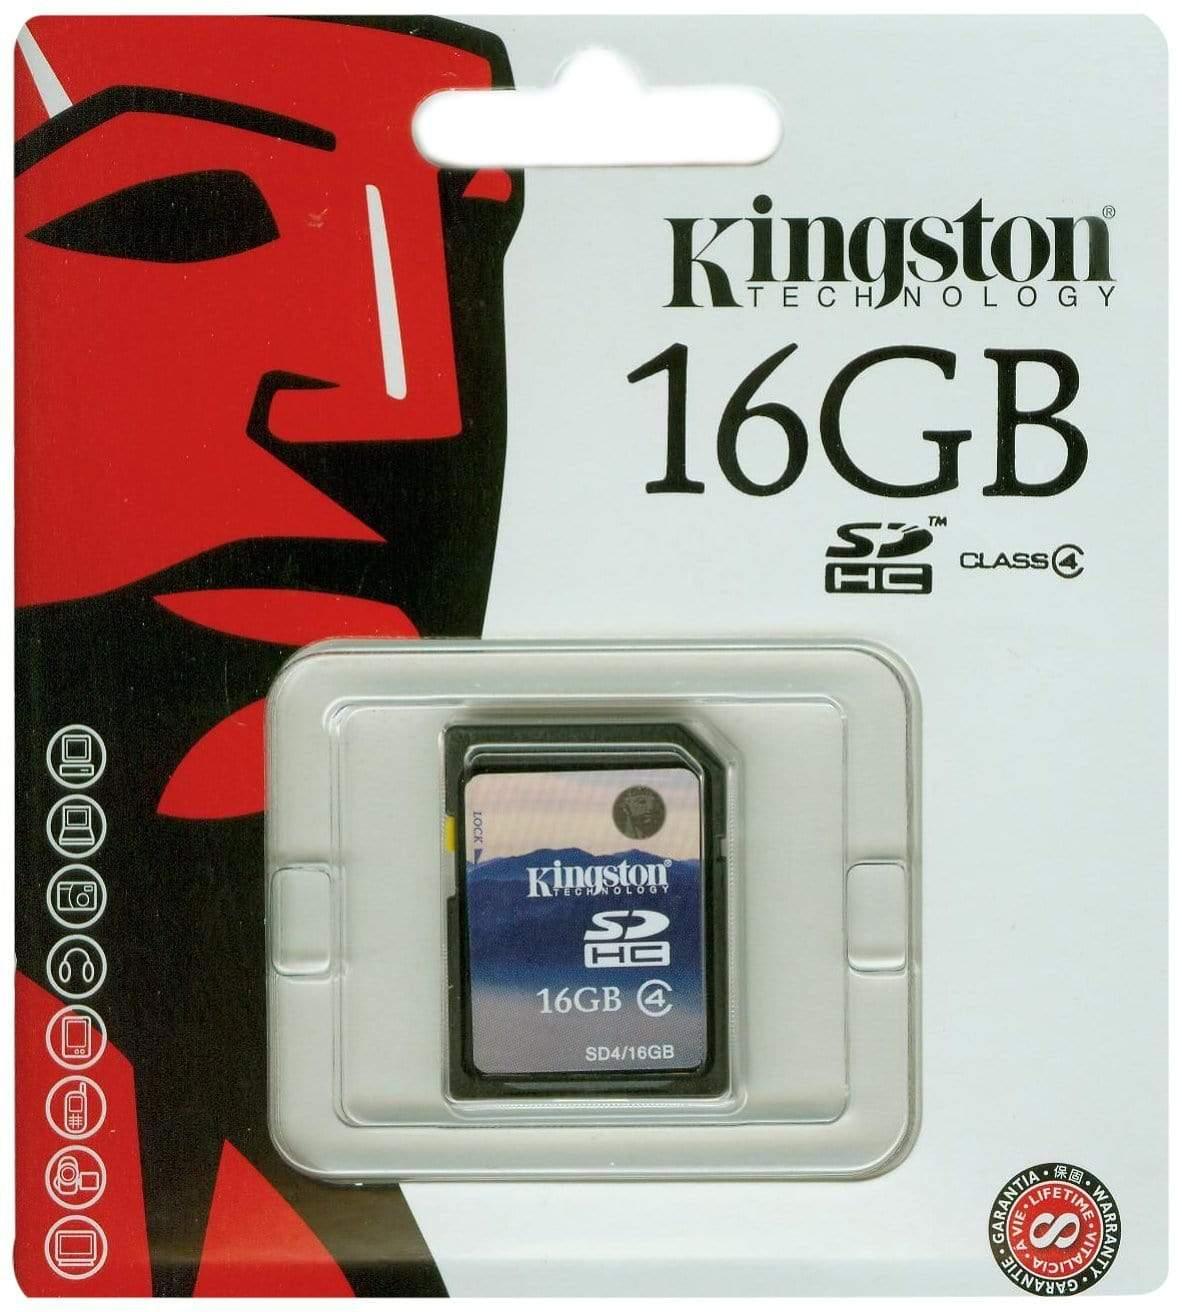 Kingston 16GB Class 4 Memory Card (SD4/16GB)-Memory Cards-dealsplant